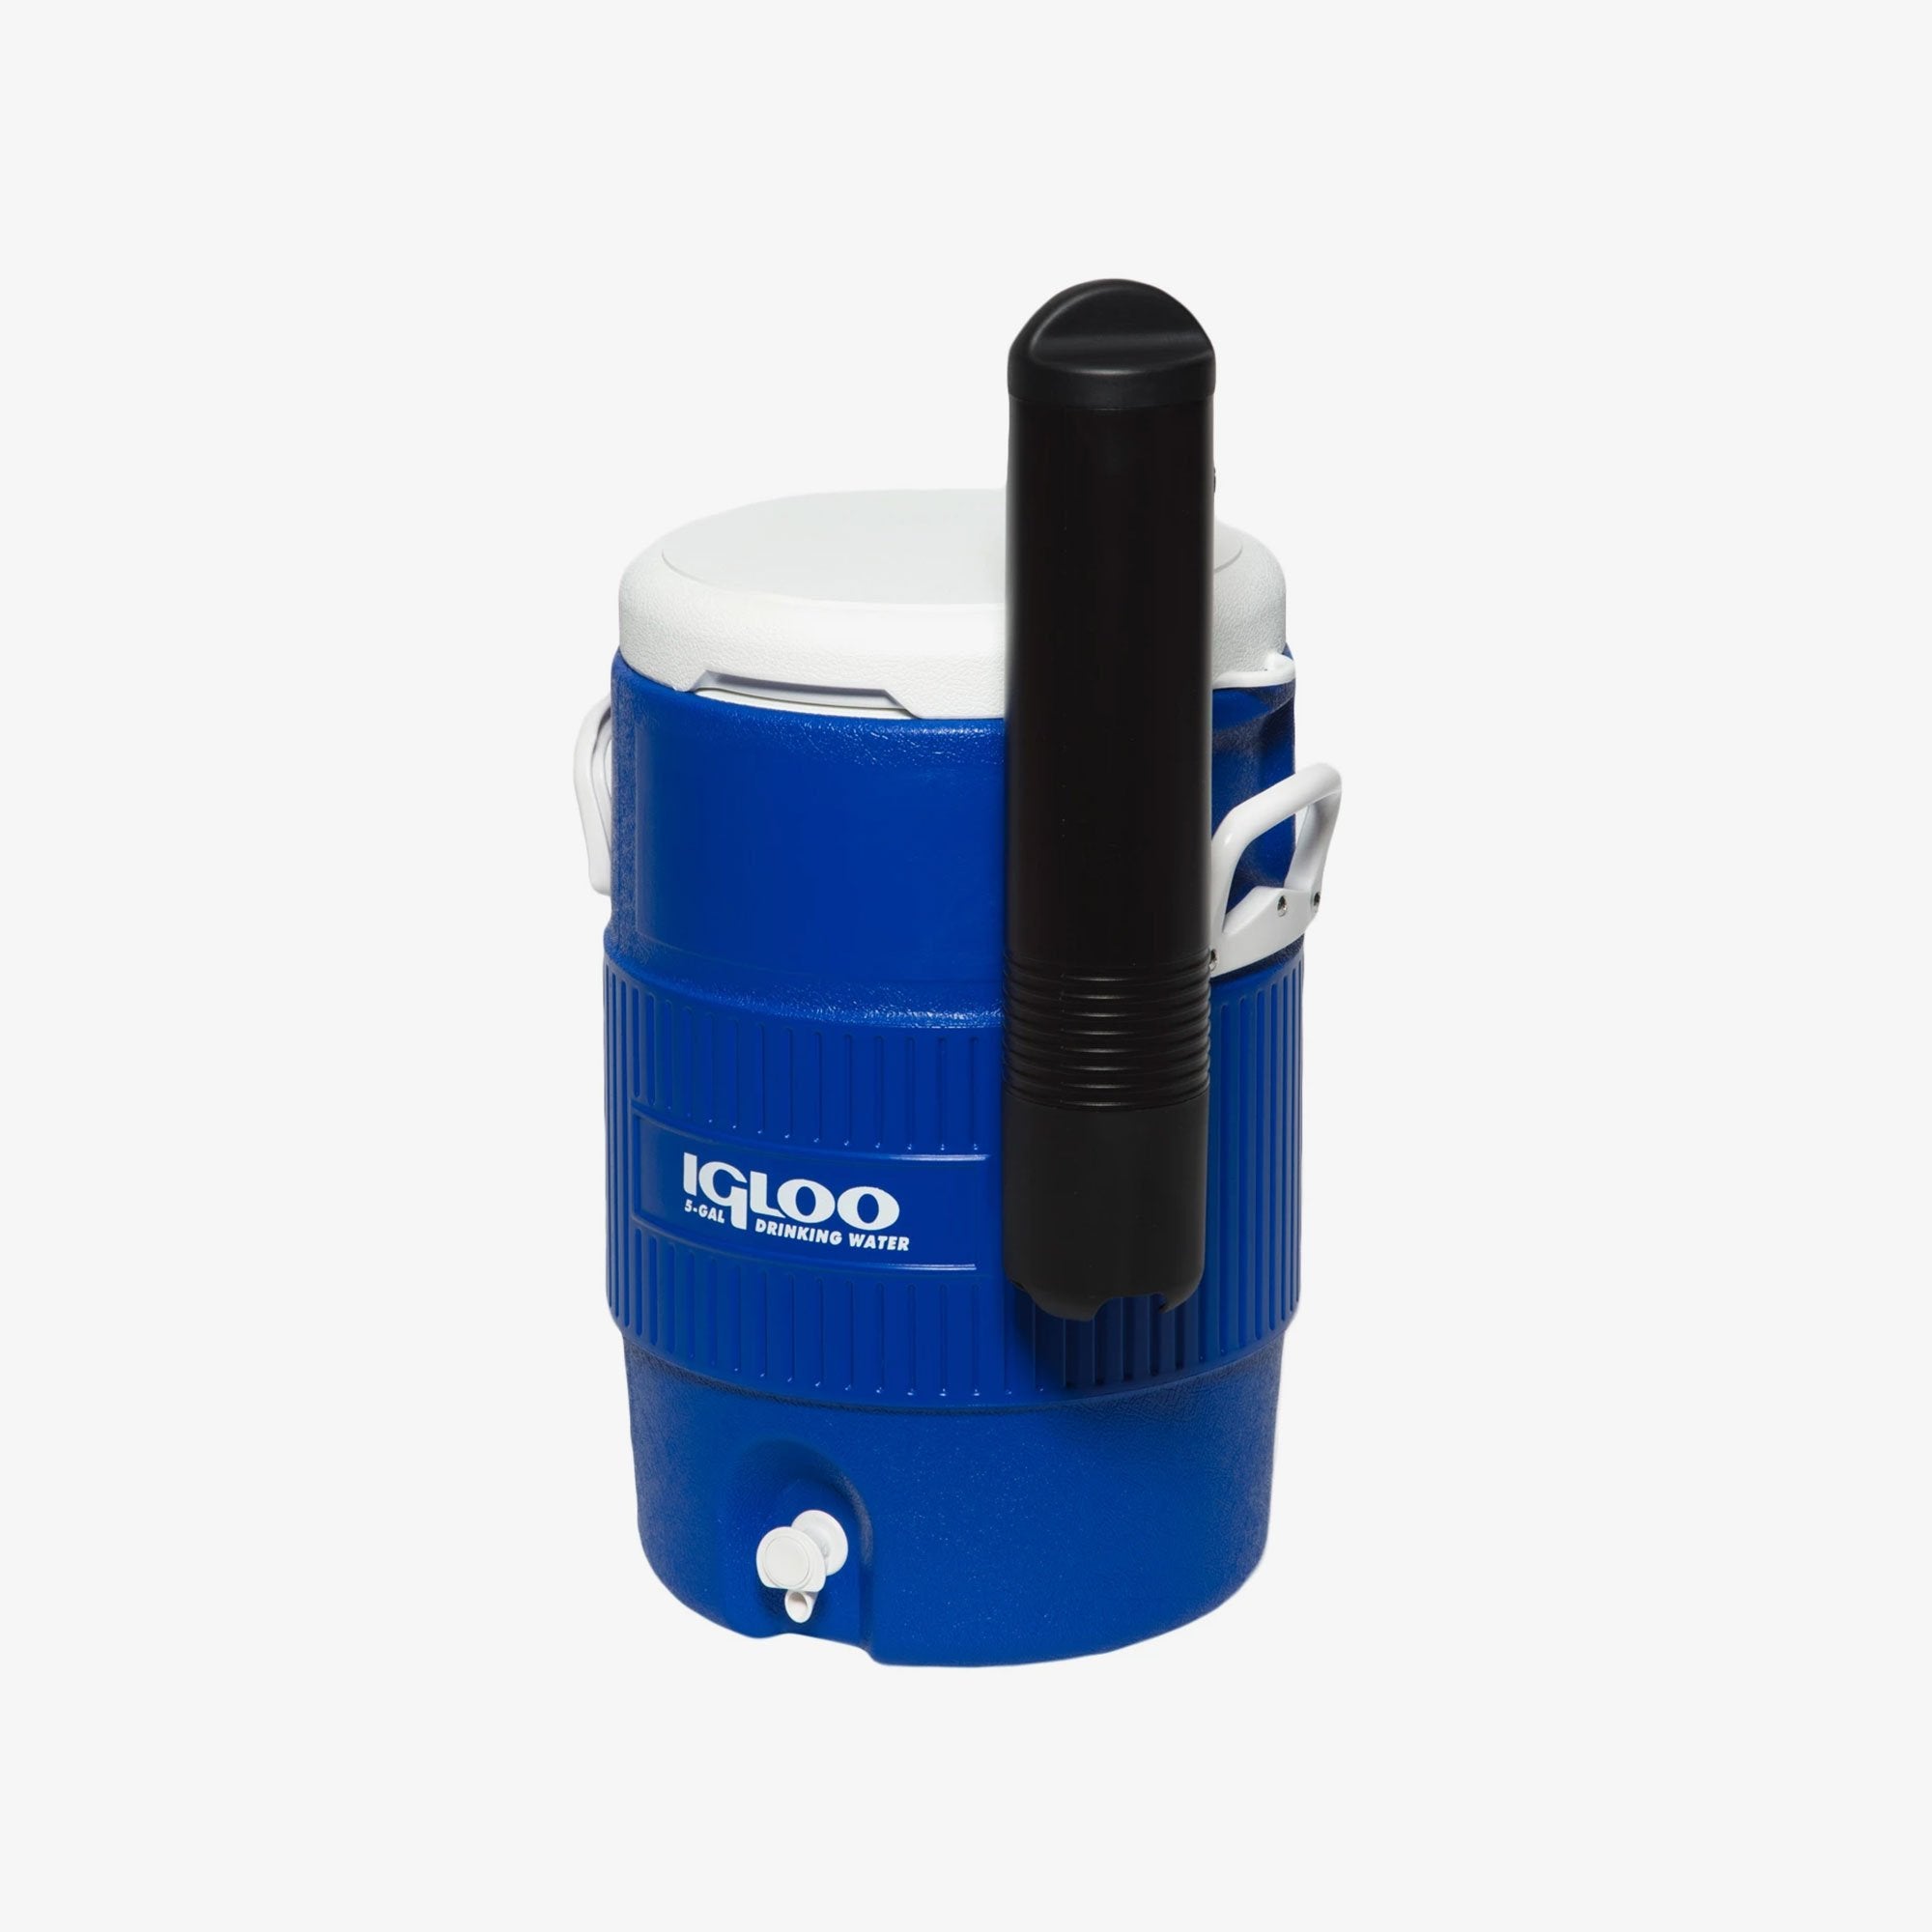 igloo 3 gallon water jug